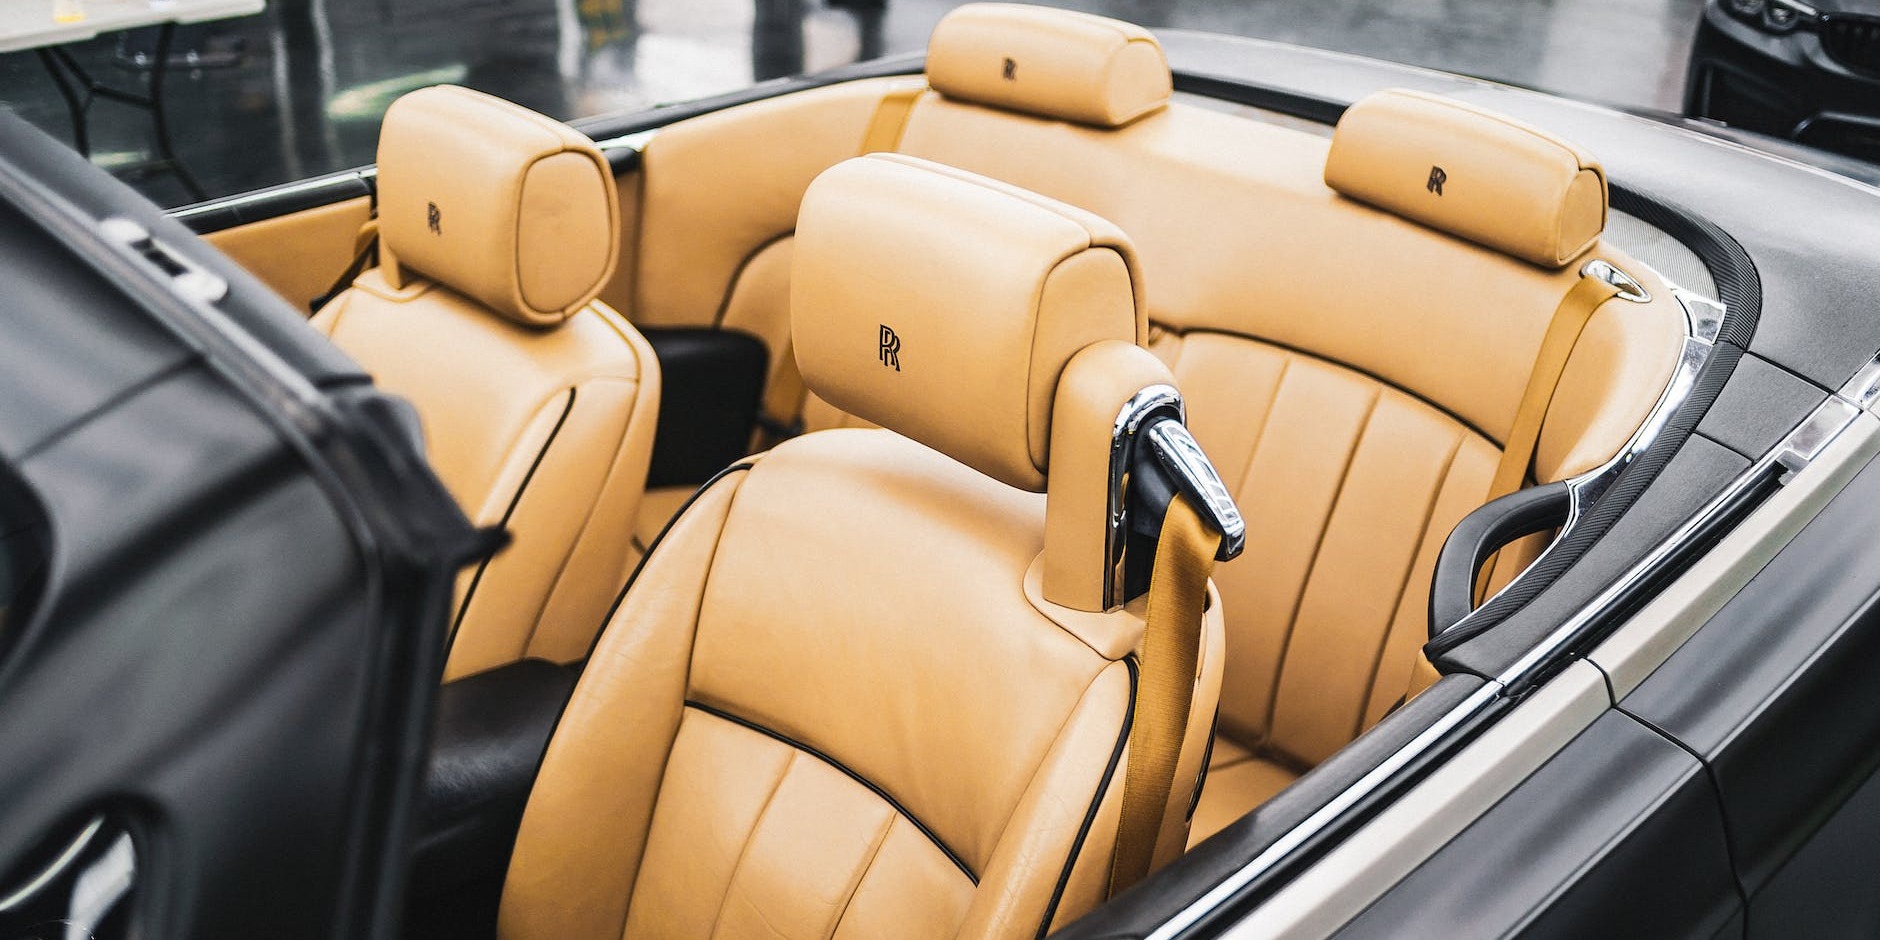 Top 10 Rolls Royce Wedding Cars to Hire: Classic vs Modern